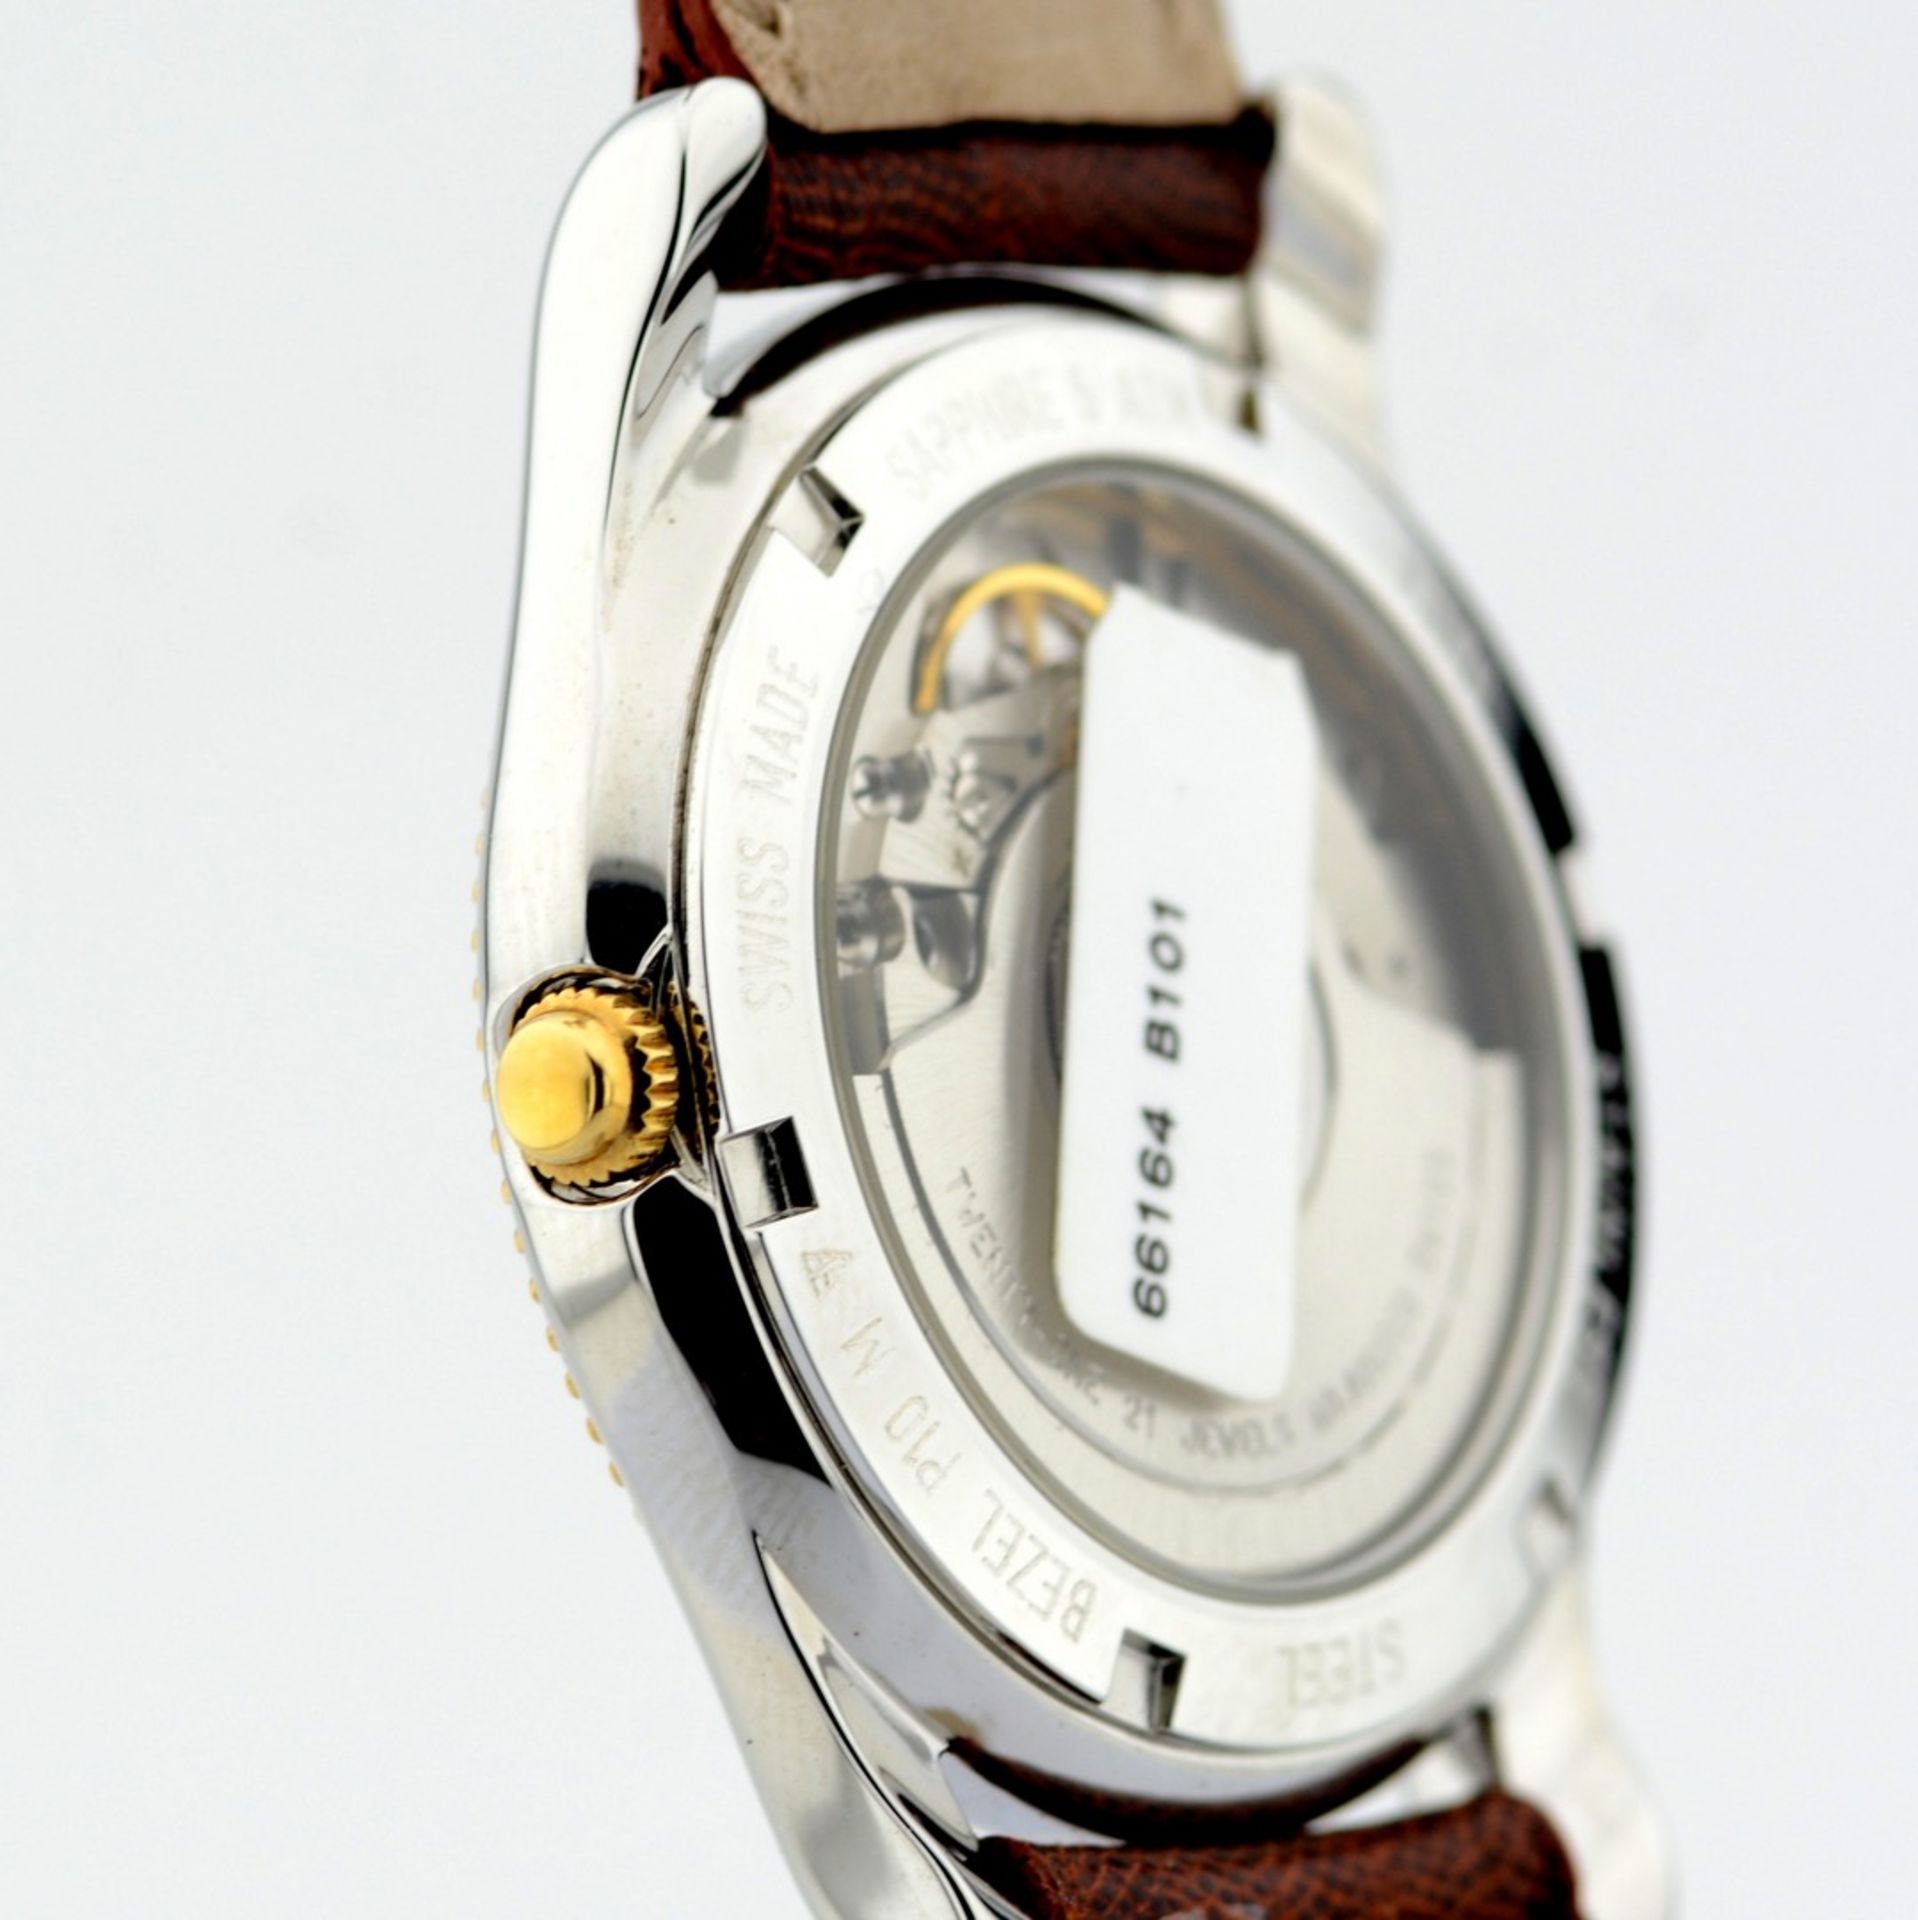 Edox / Automatic Date - Gentlemen's Gold/Steel Wristwatch - Image 5 of 7